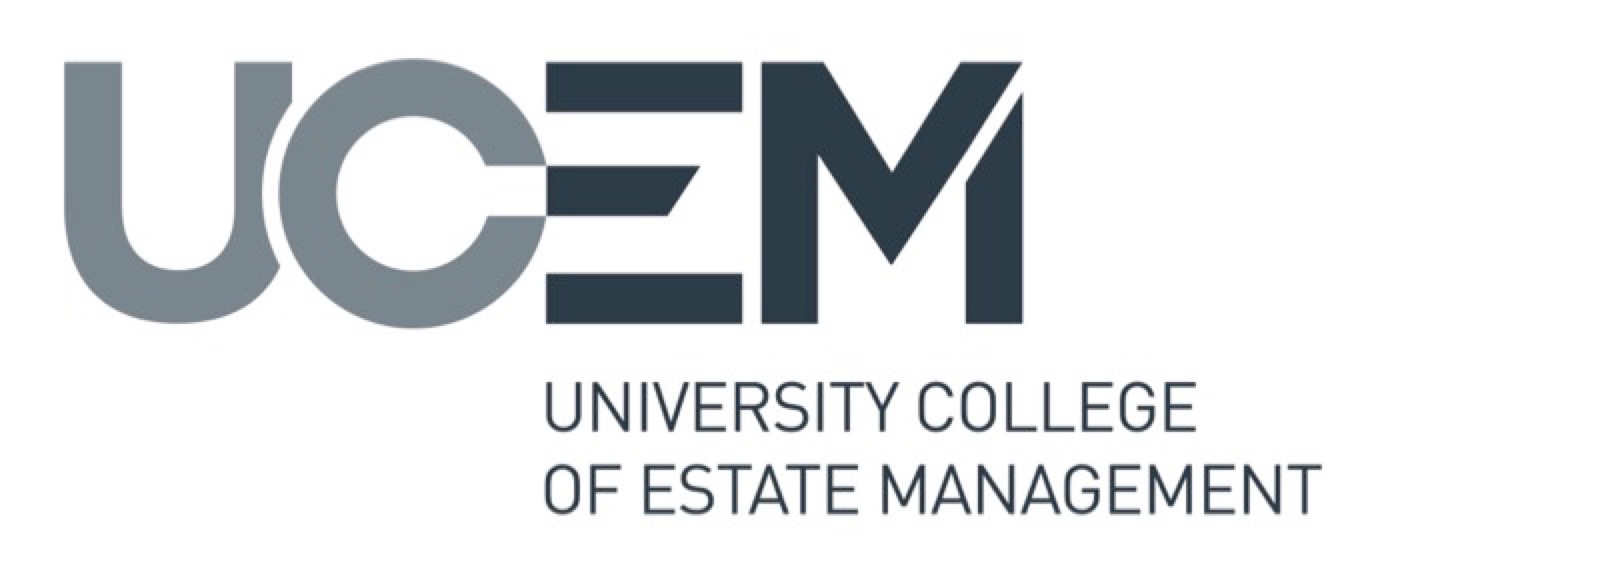 UCEM logo